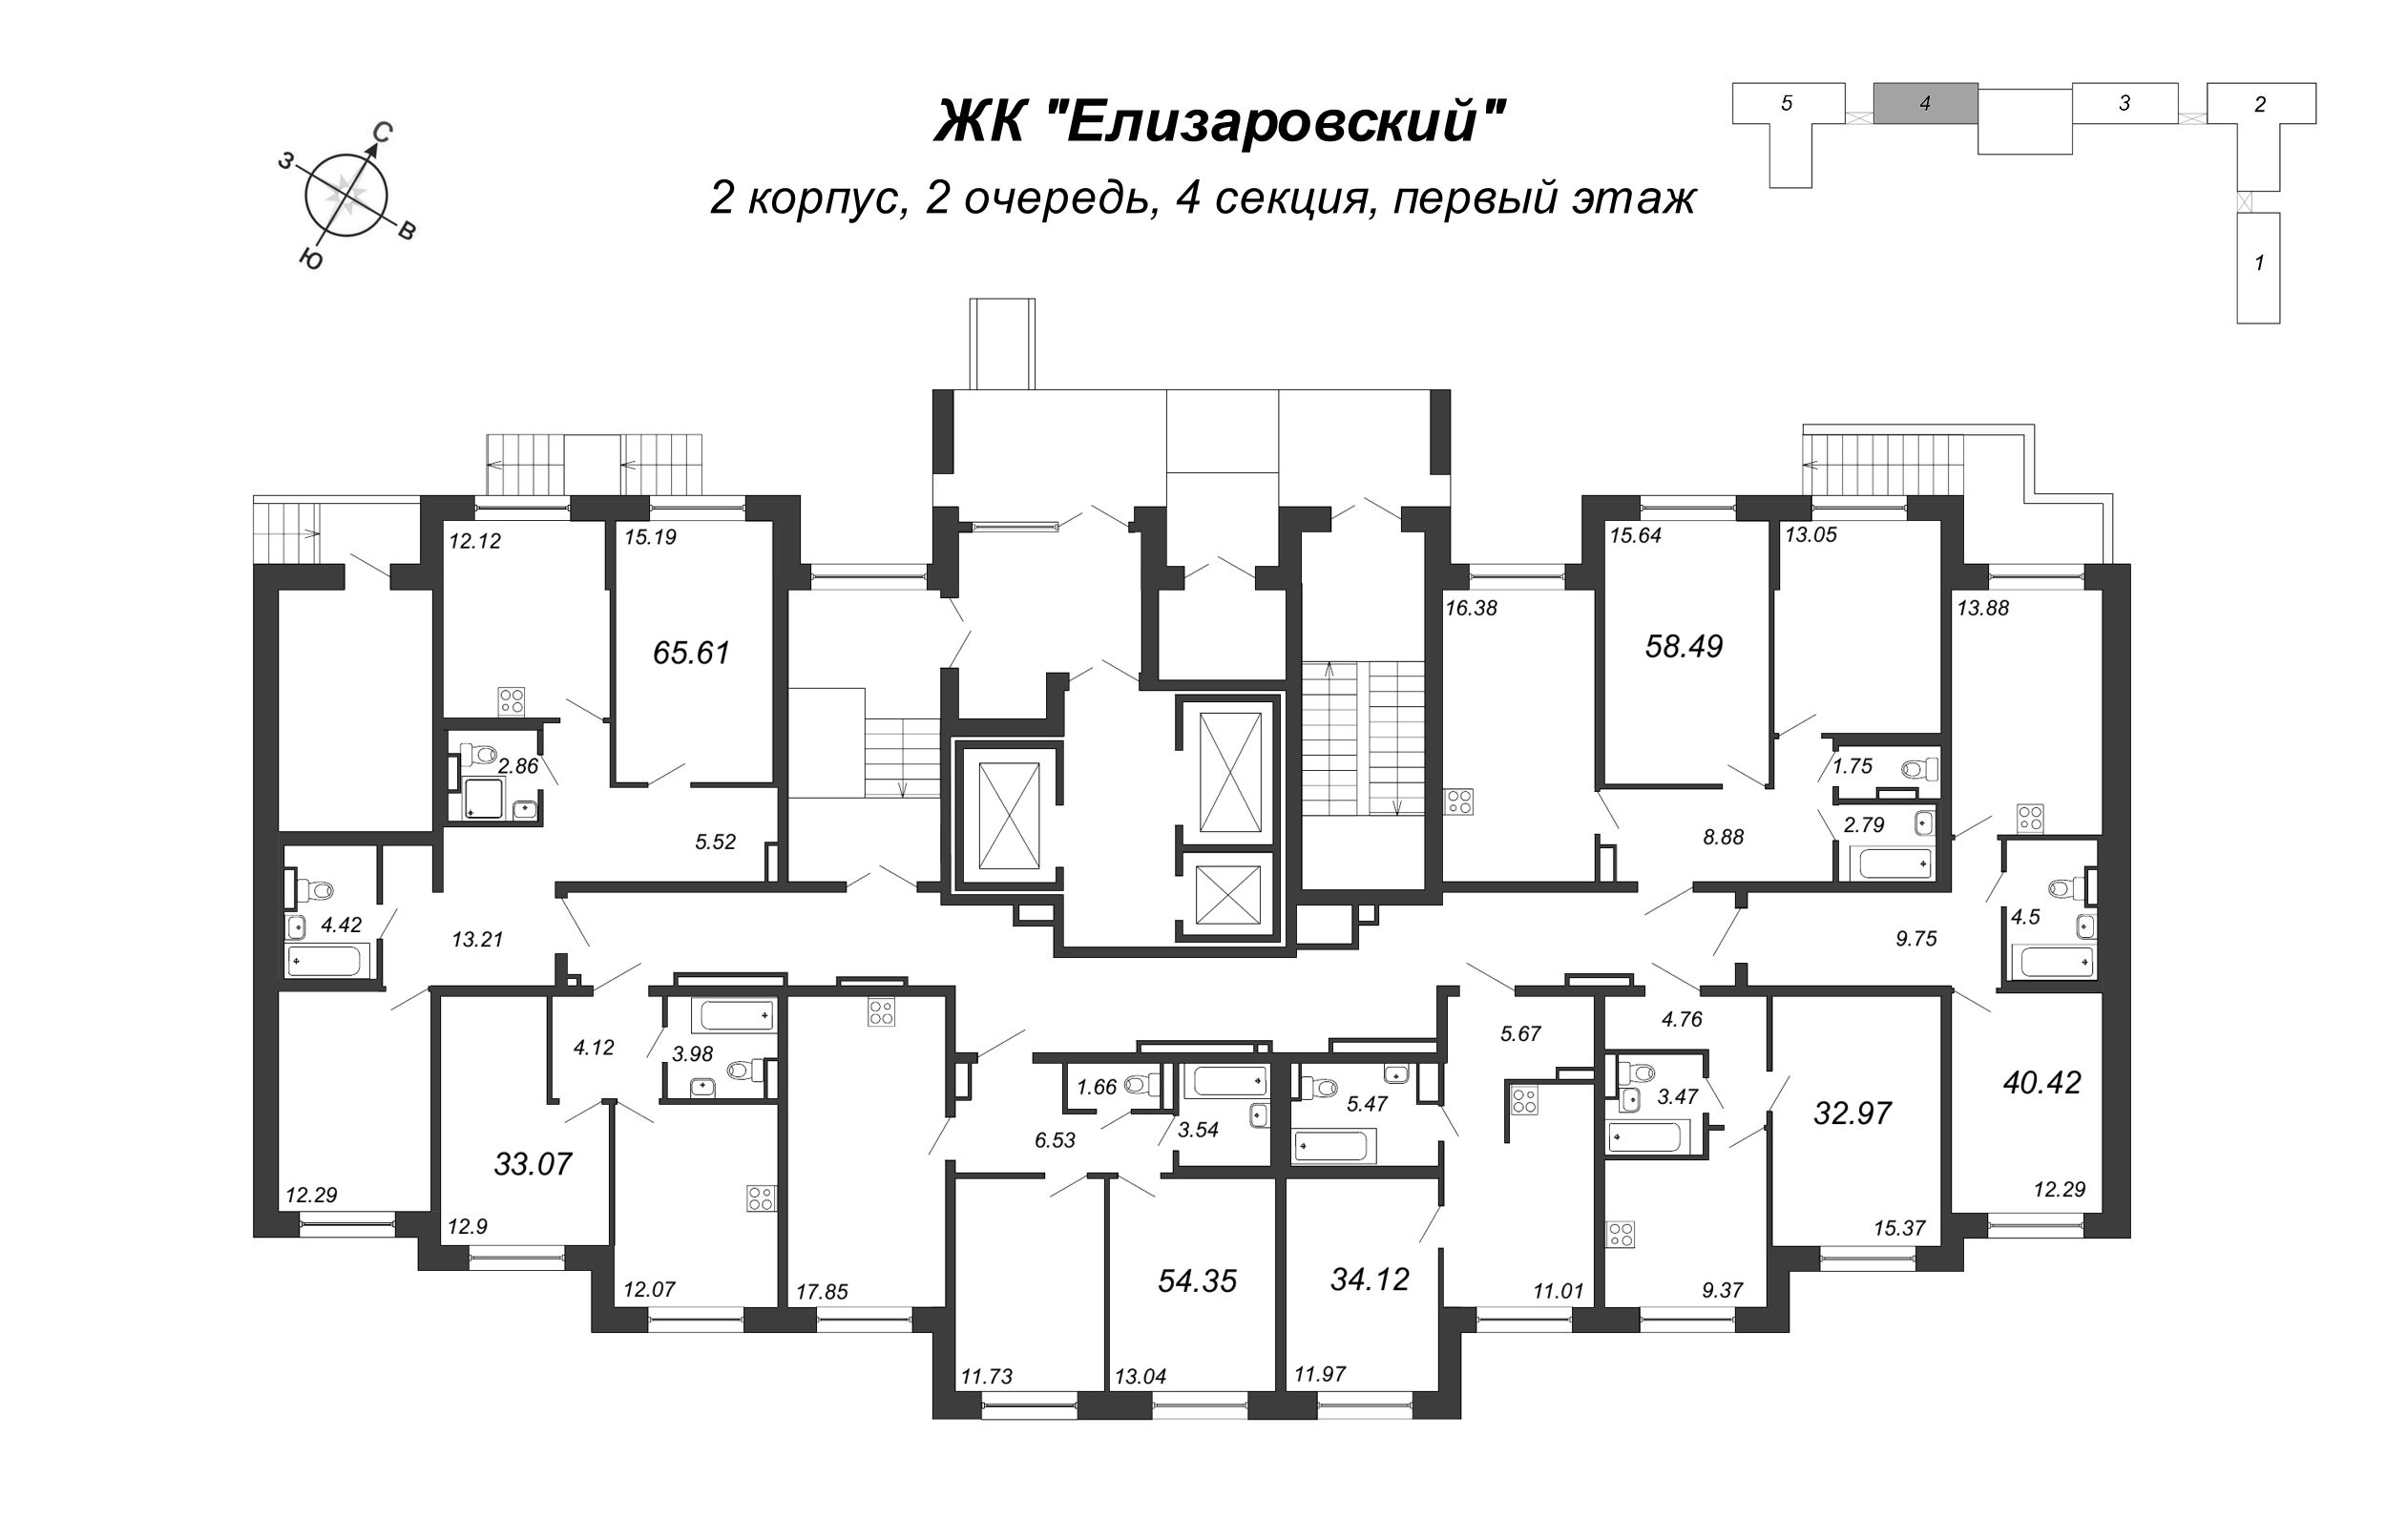 3-комнатная (Евро) квартира, 65.61 м² - планировка этажа